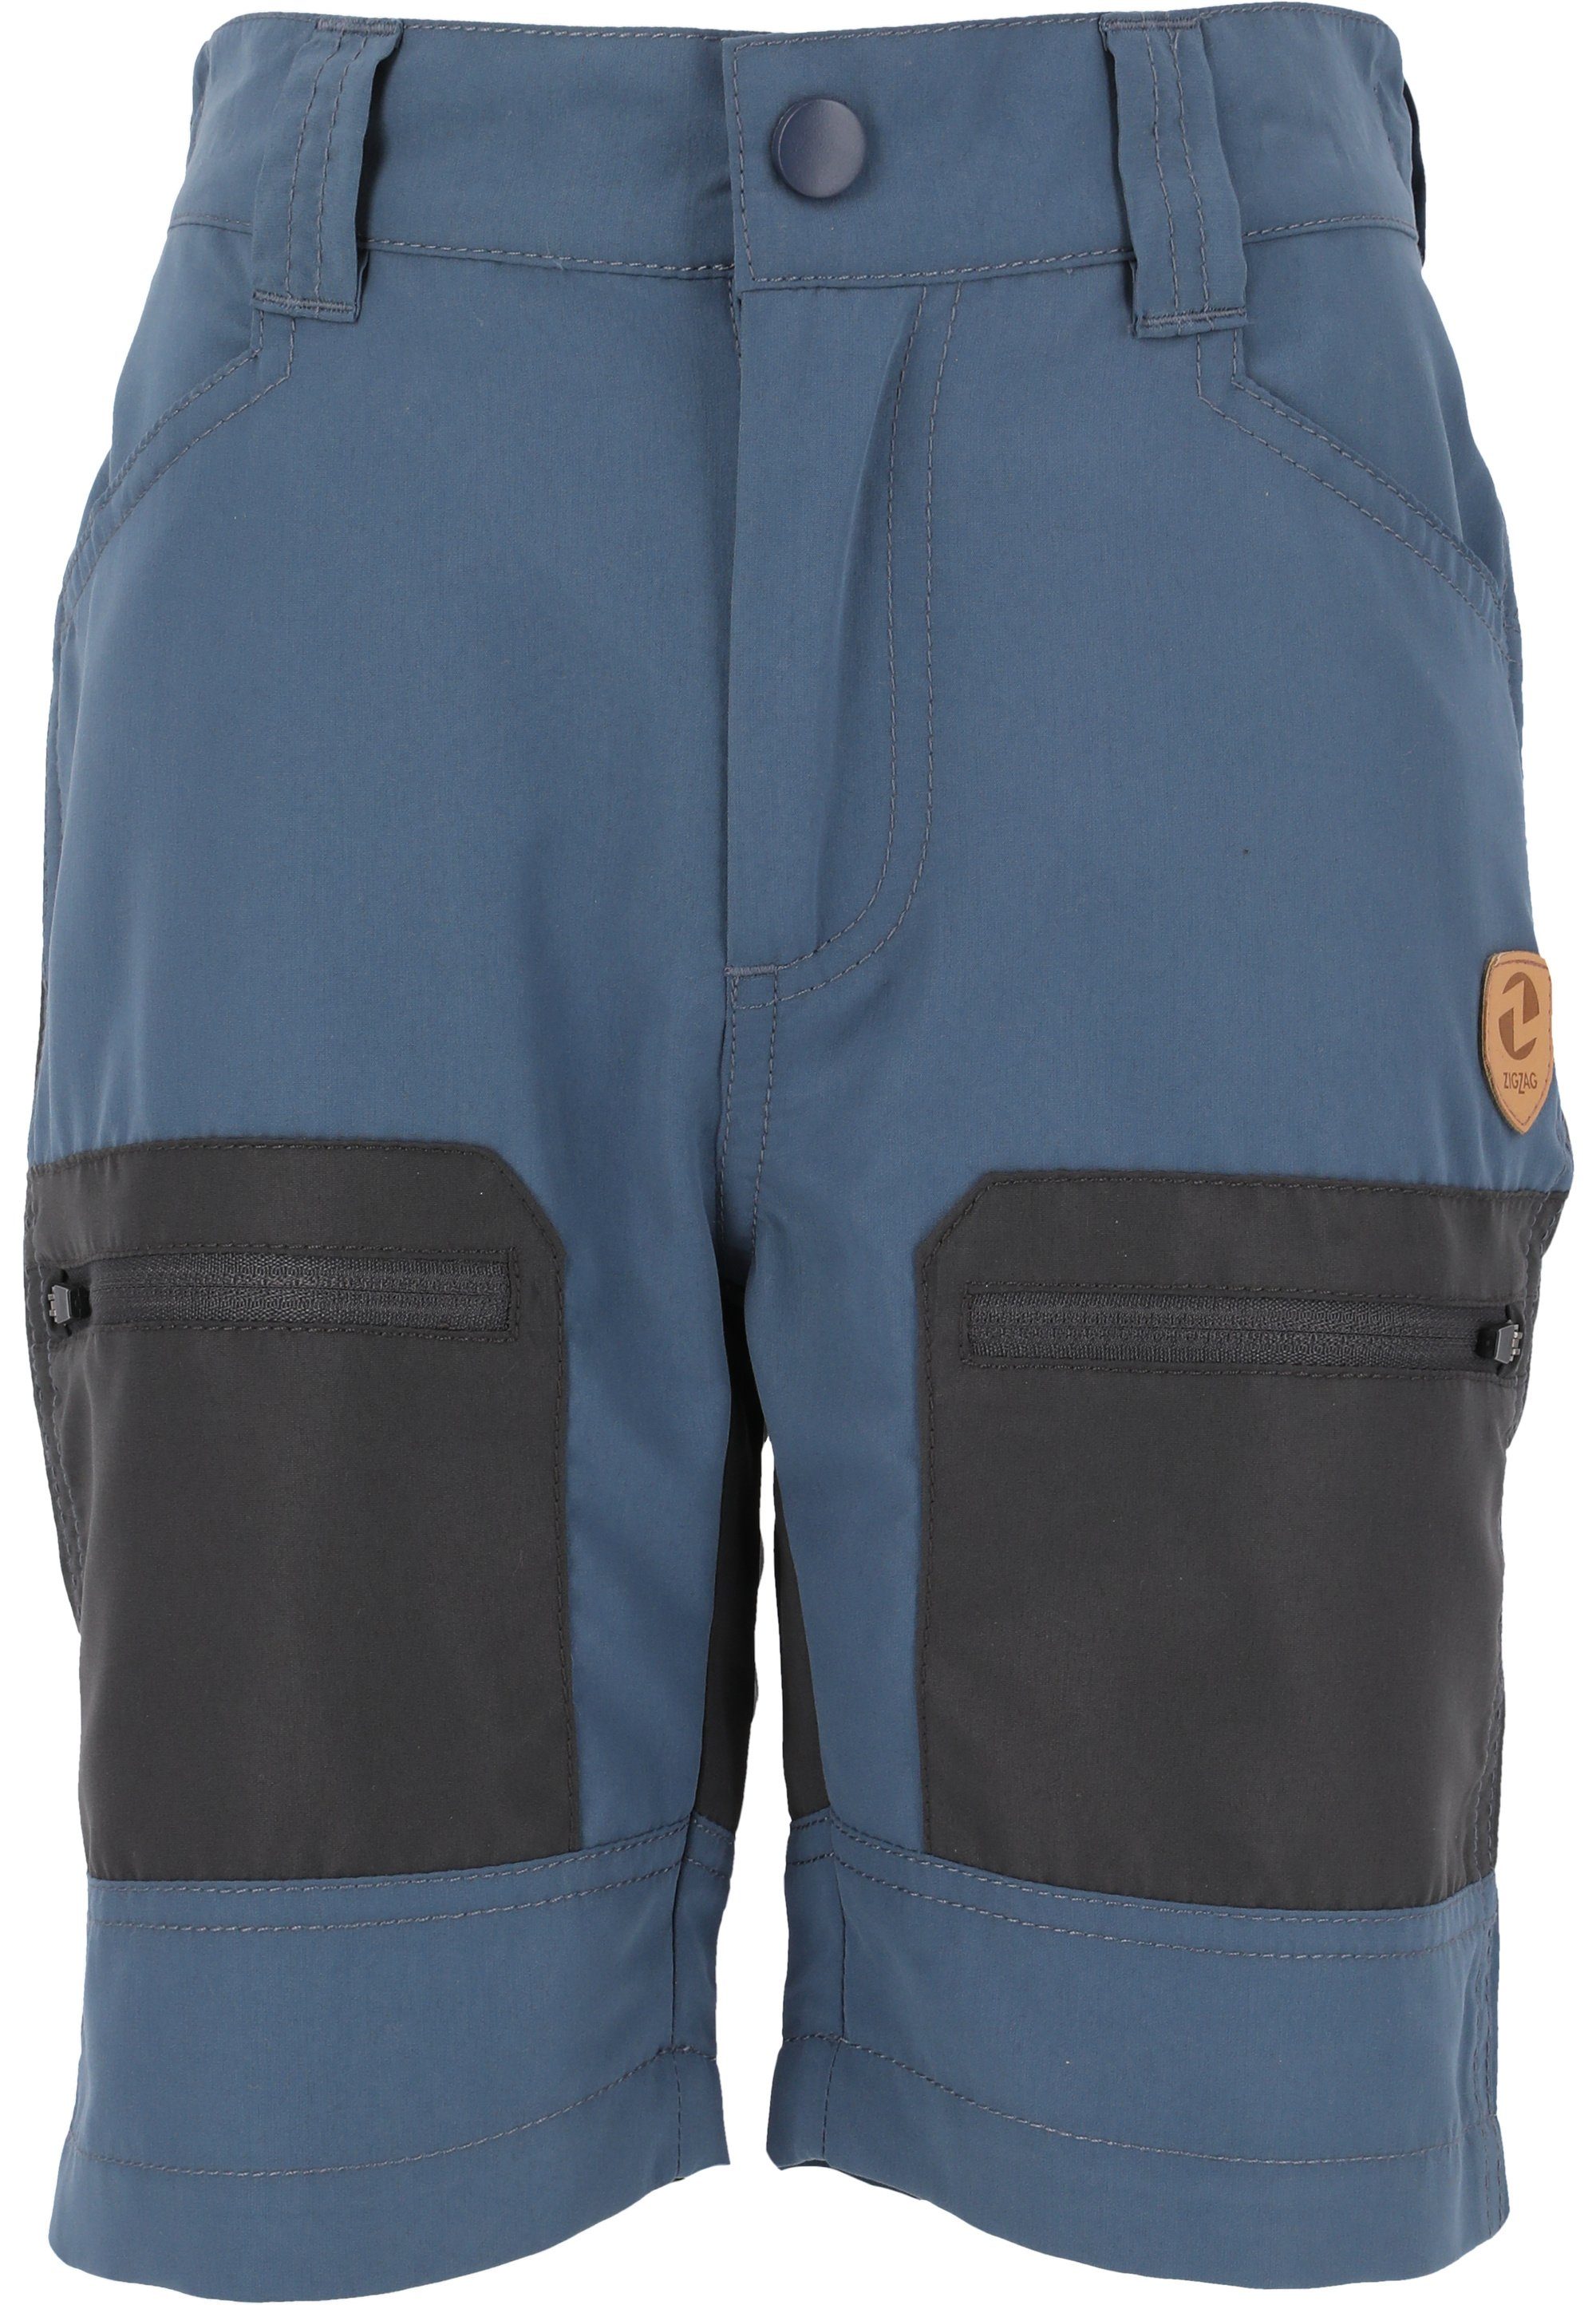 blau-schwarz Material robustem Shorts aus ZIGZAG Atlantic